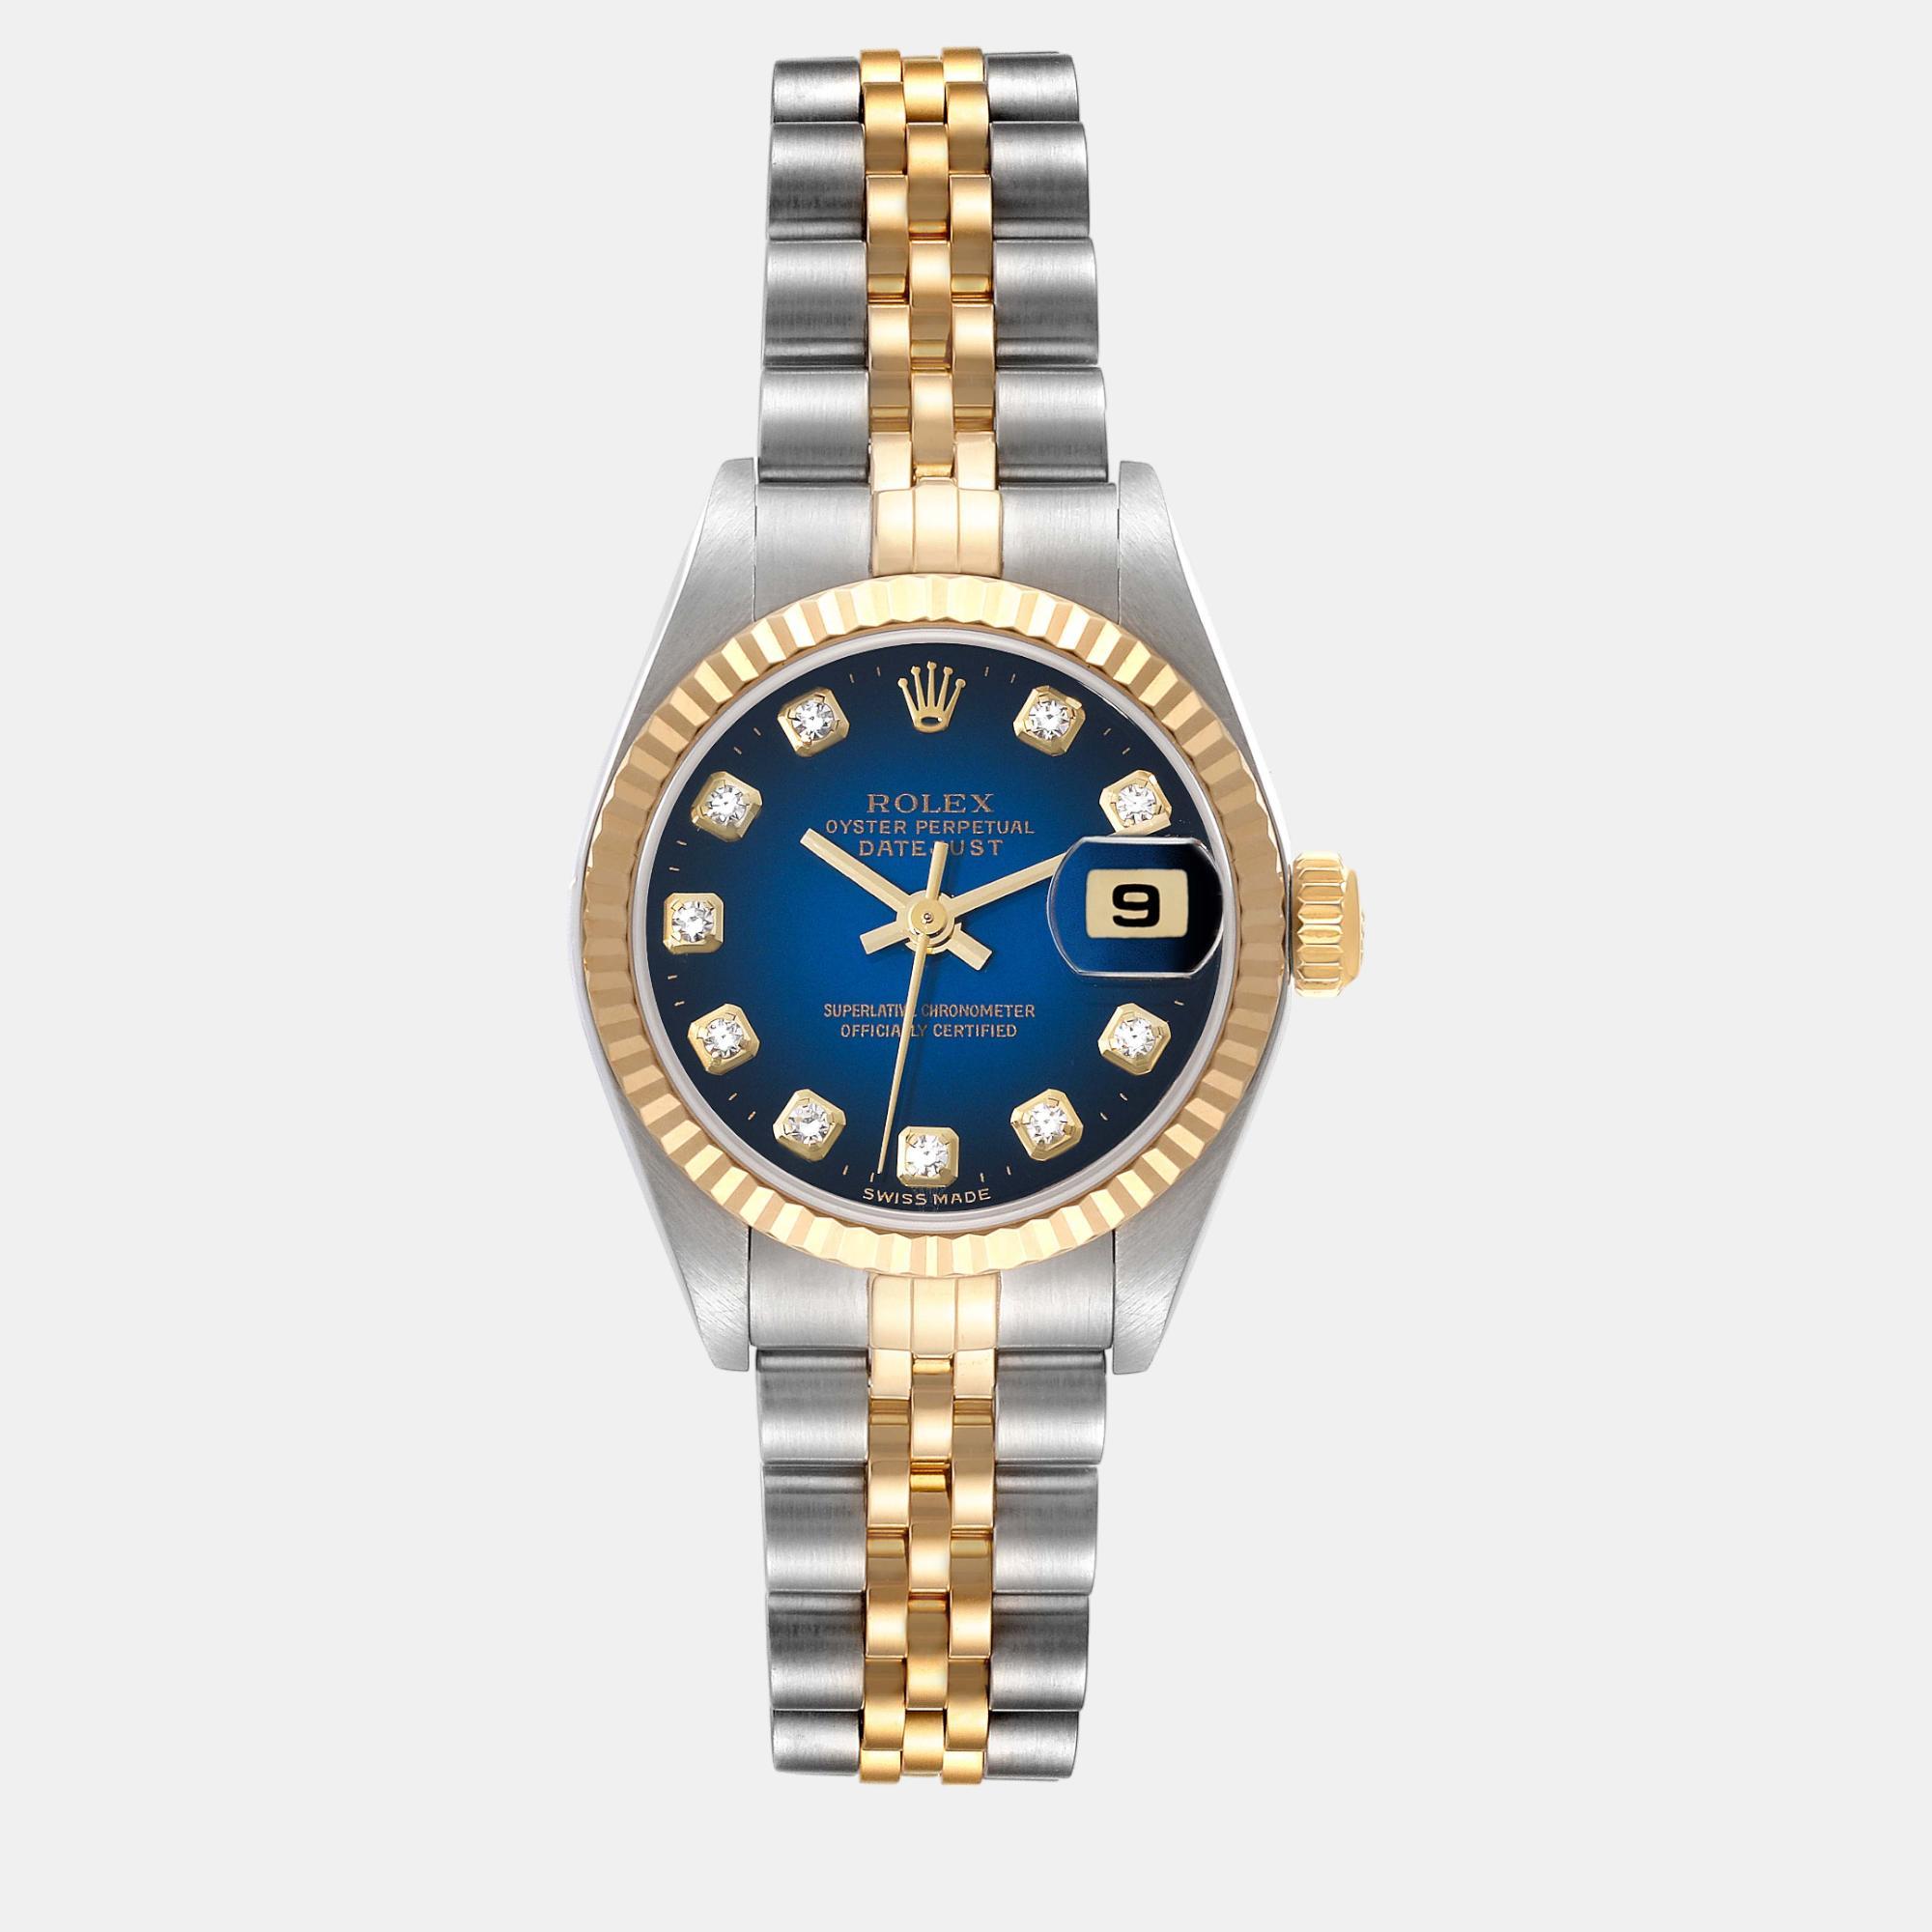 Rolex datejust steel yellow gold blue vignette diamond dial ladies watch 26.0 mm